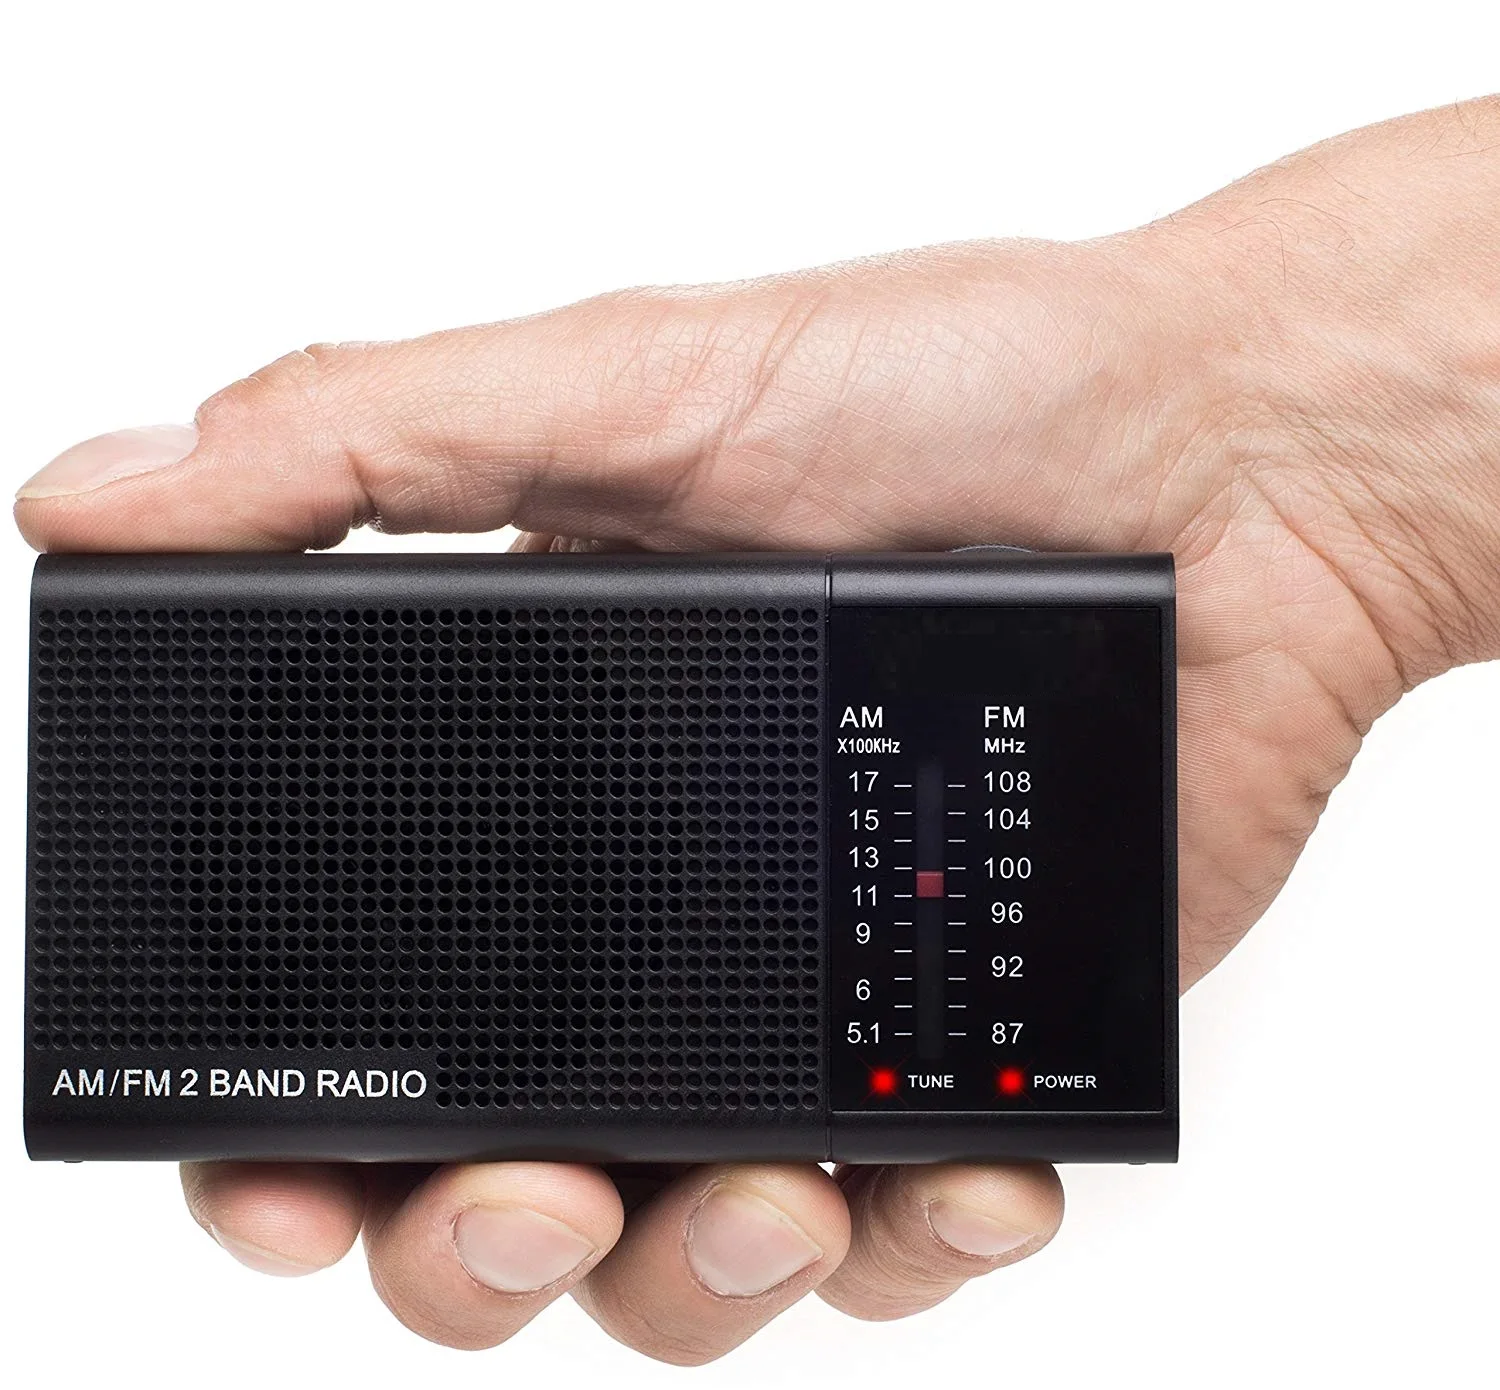 

Portable radio pocket radio mini AM/FM radio battery operated, Black, silver